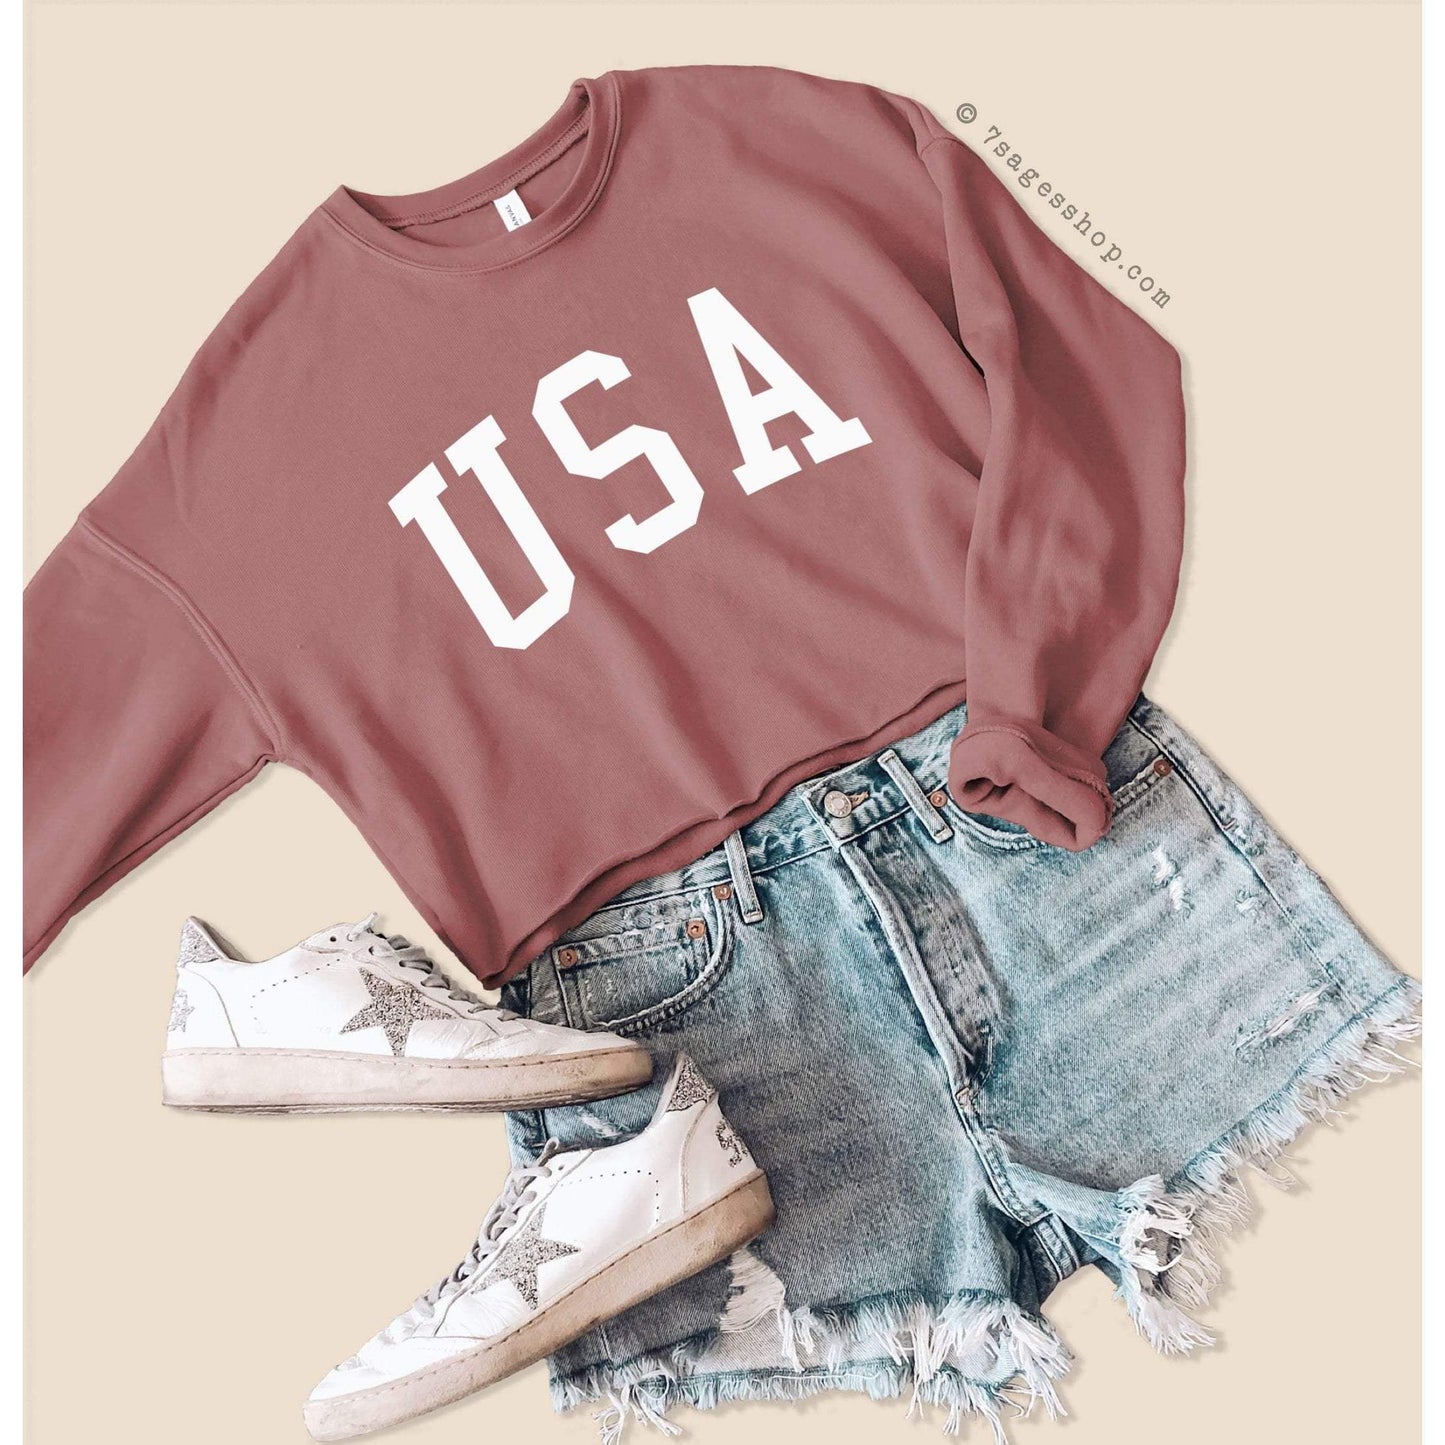 July 4th Shirt - USA Cropped Sweatshirt - USA Sweatshirt - USA Shirt - America Crop Top - Fleece Crewneck Sweater